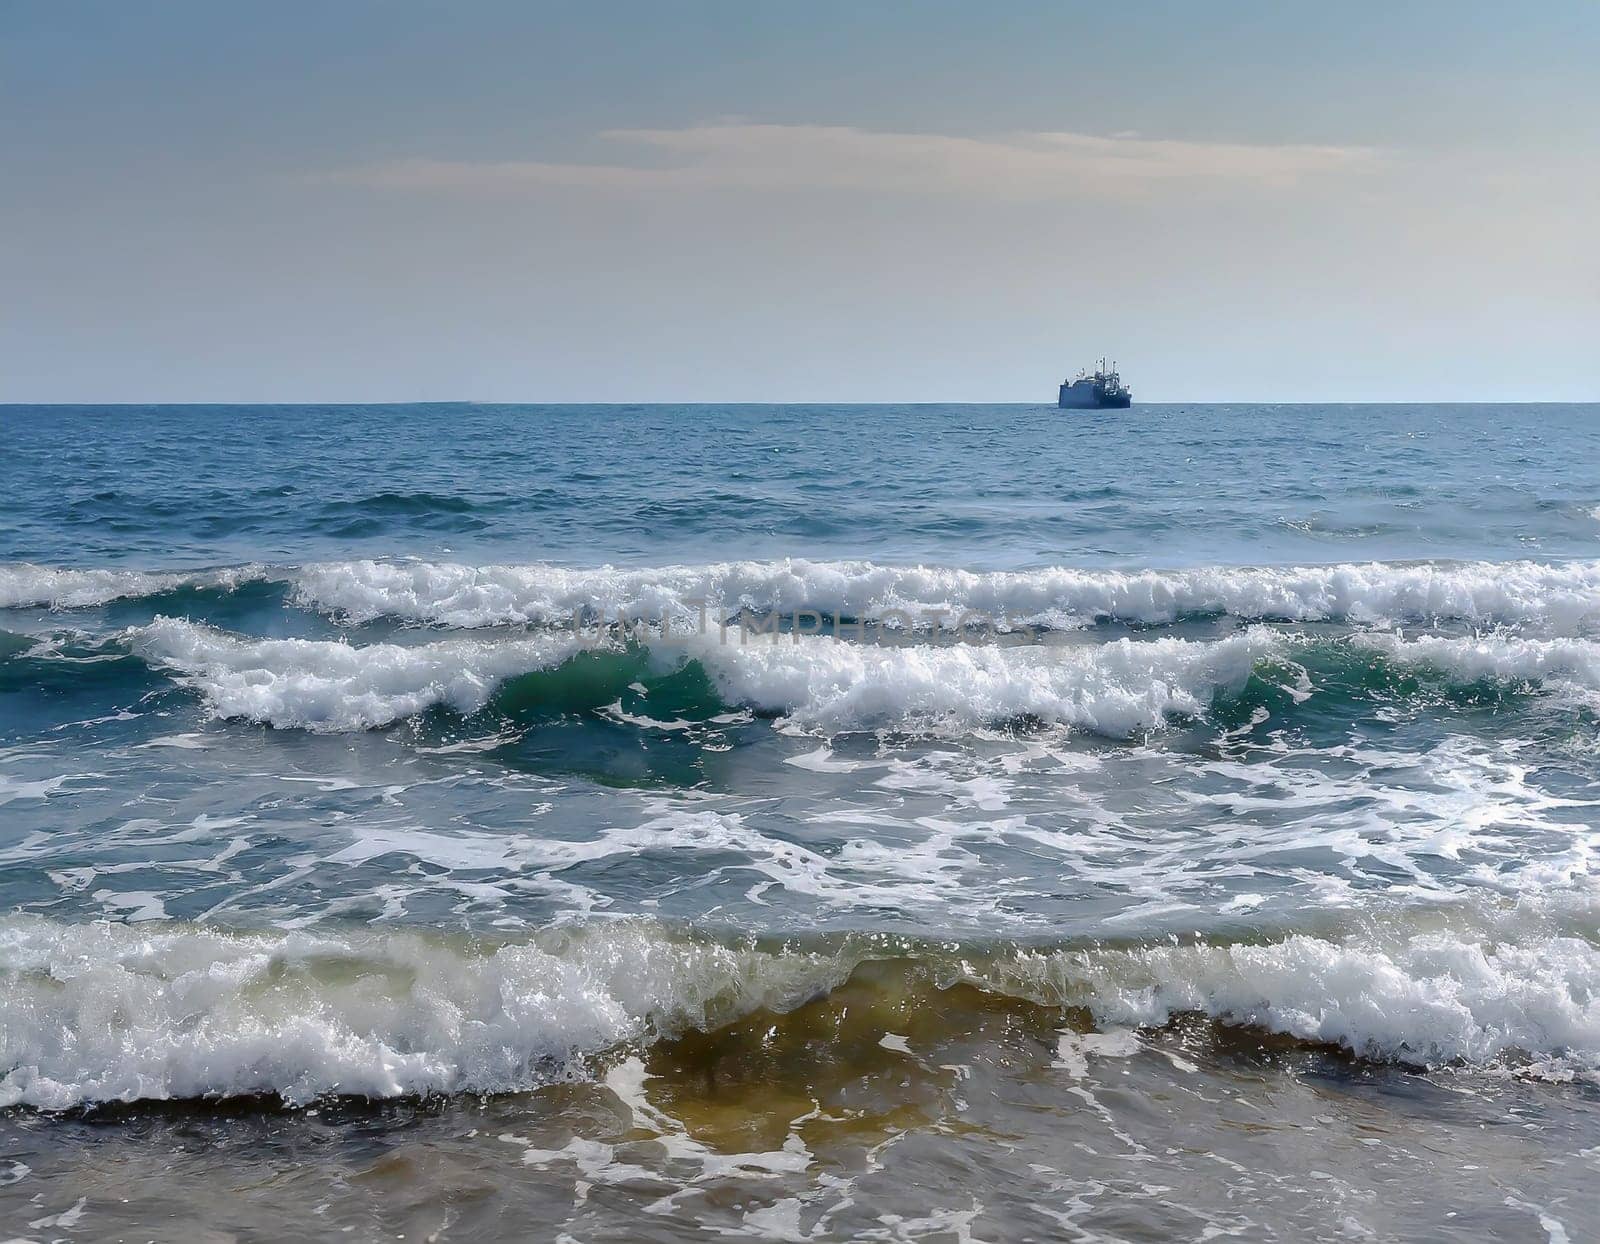 three waves near the shore. a blurred ship on the horizon. Sea waves by Suietska